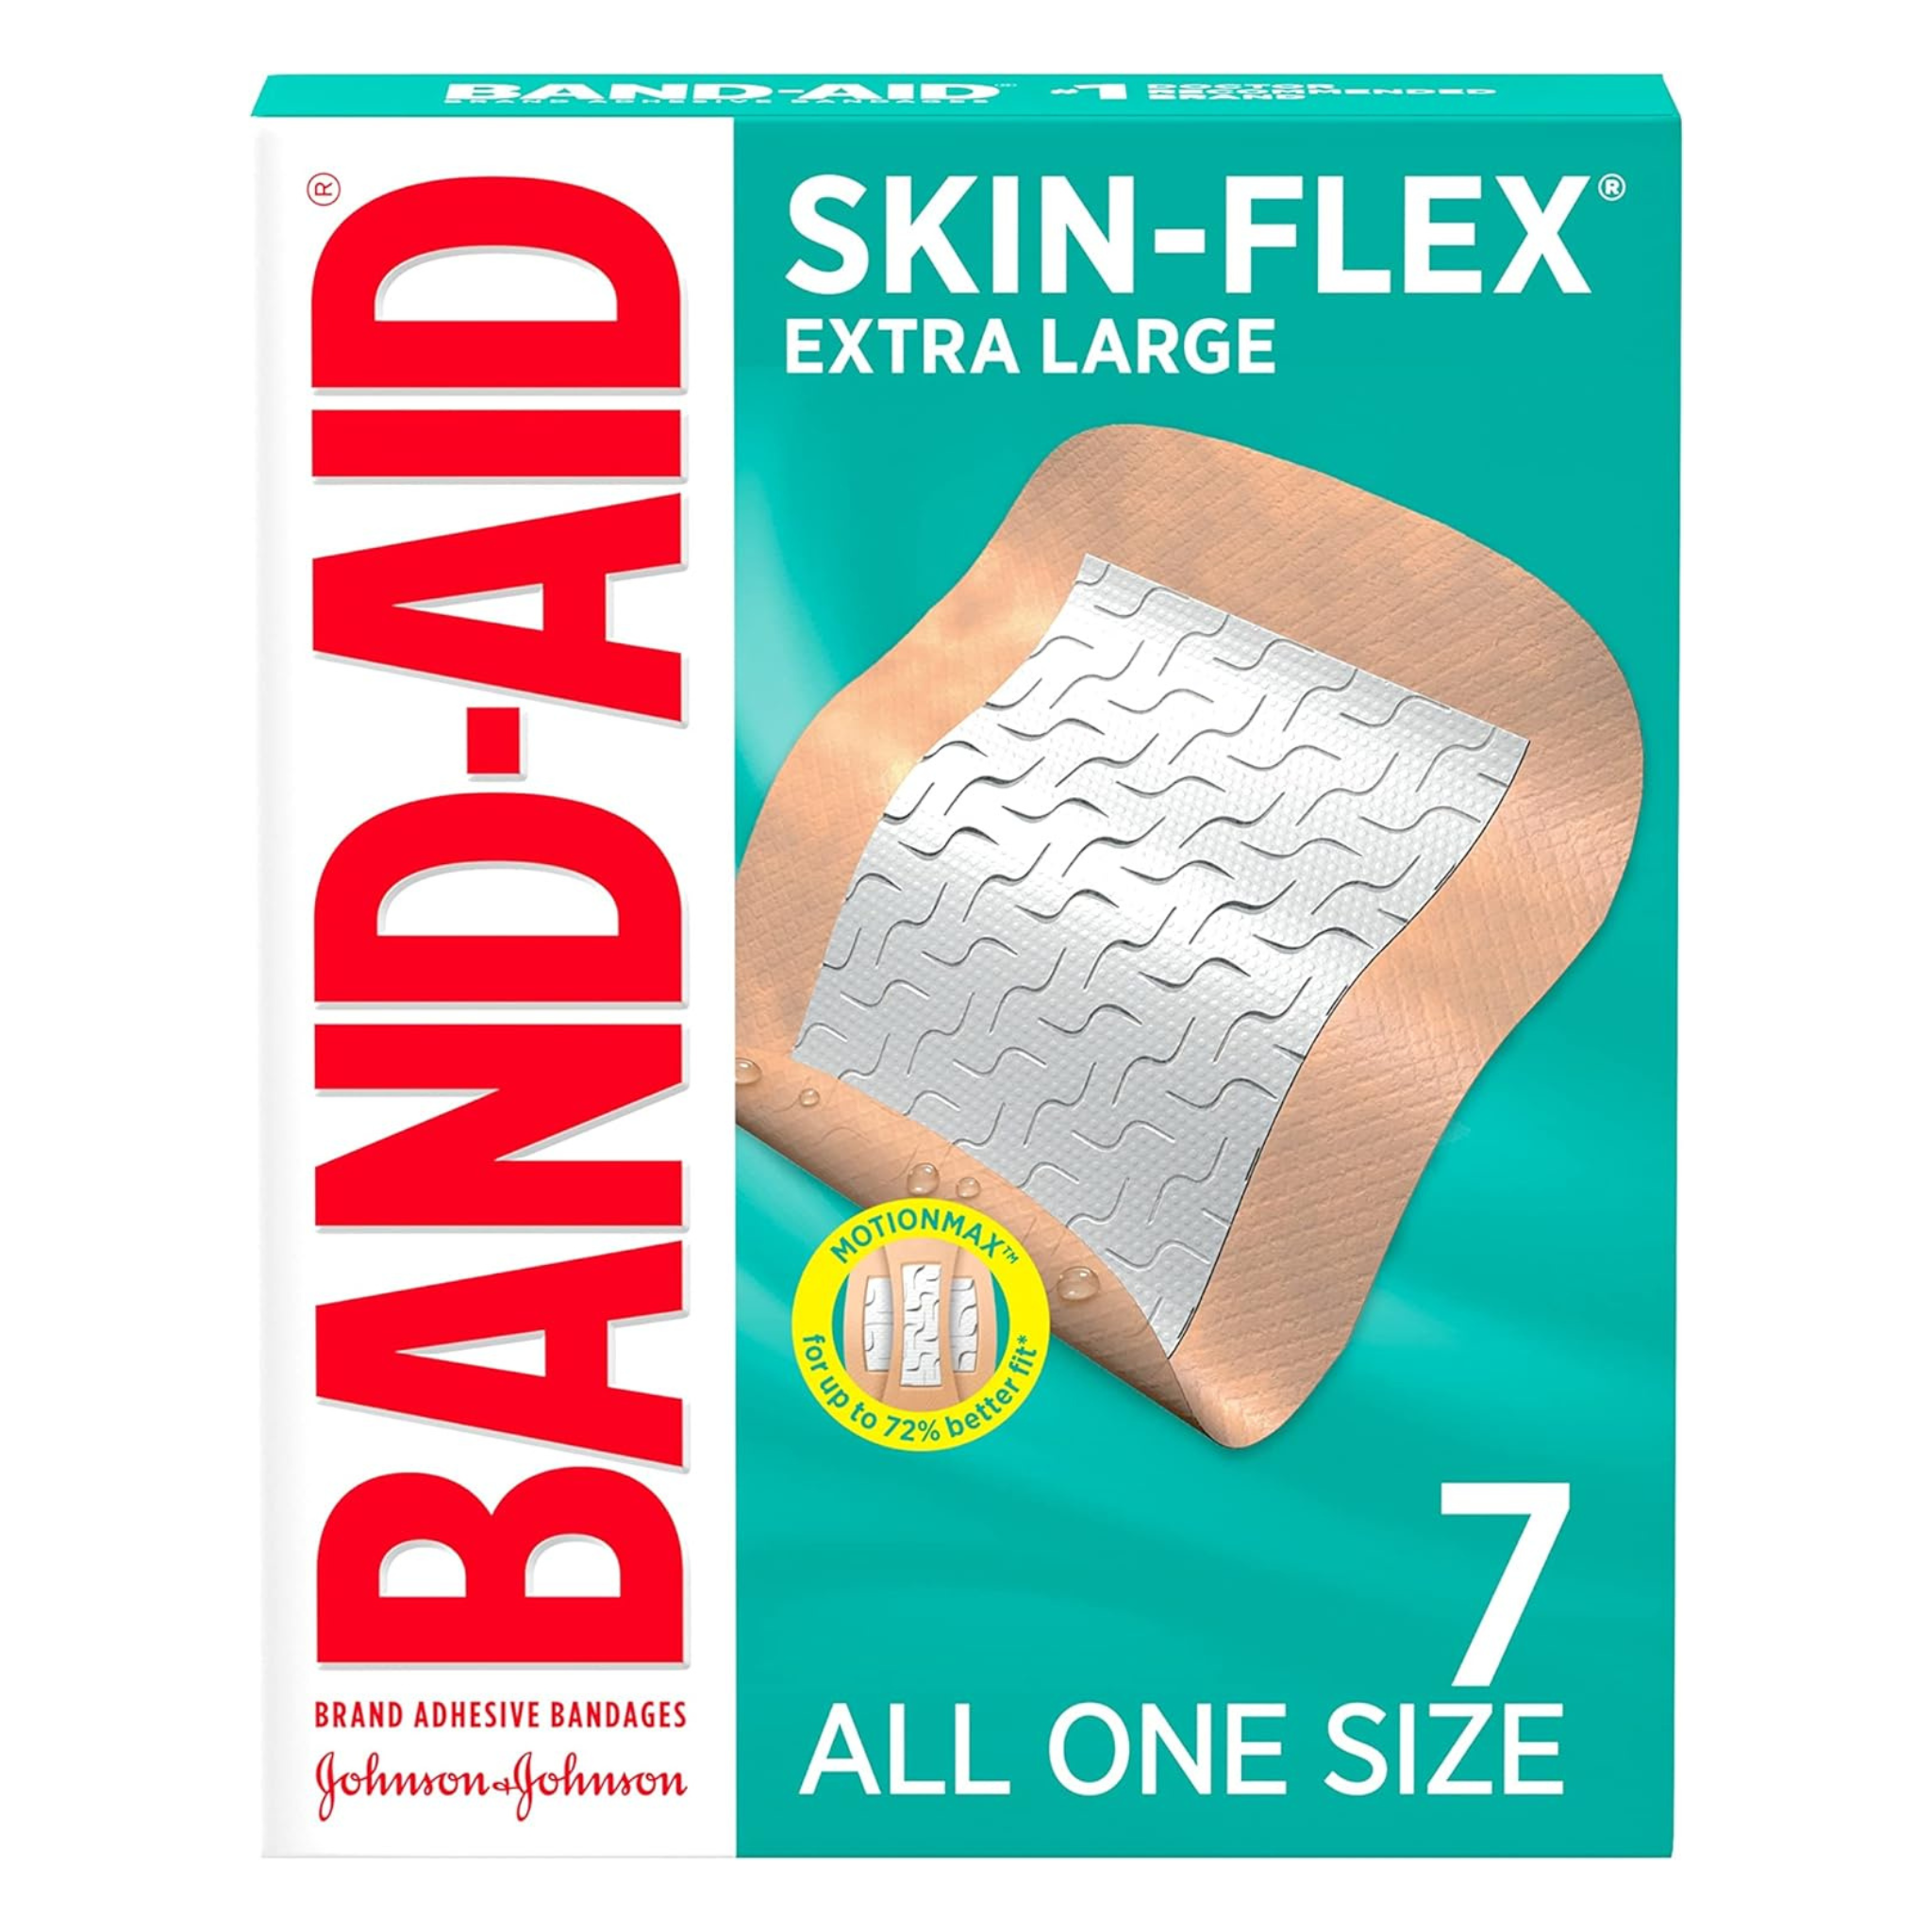 7-Count Band-Aid Brand Skin-Flex Extra Large Adhesive Bandages